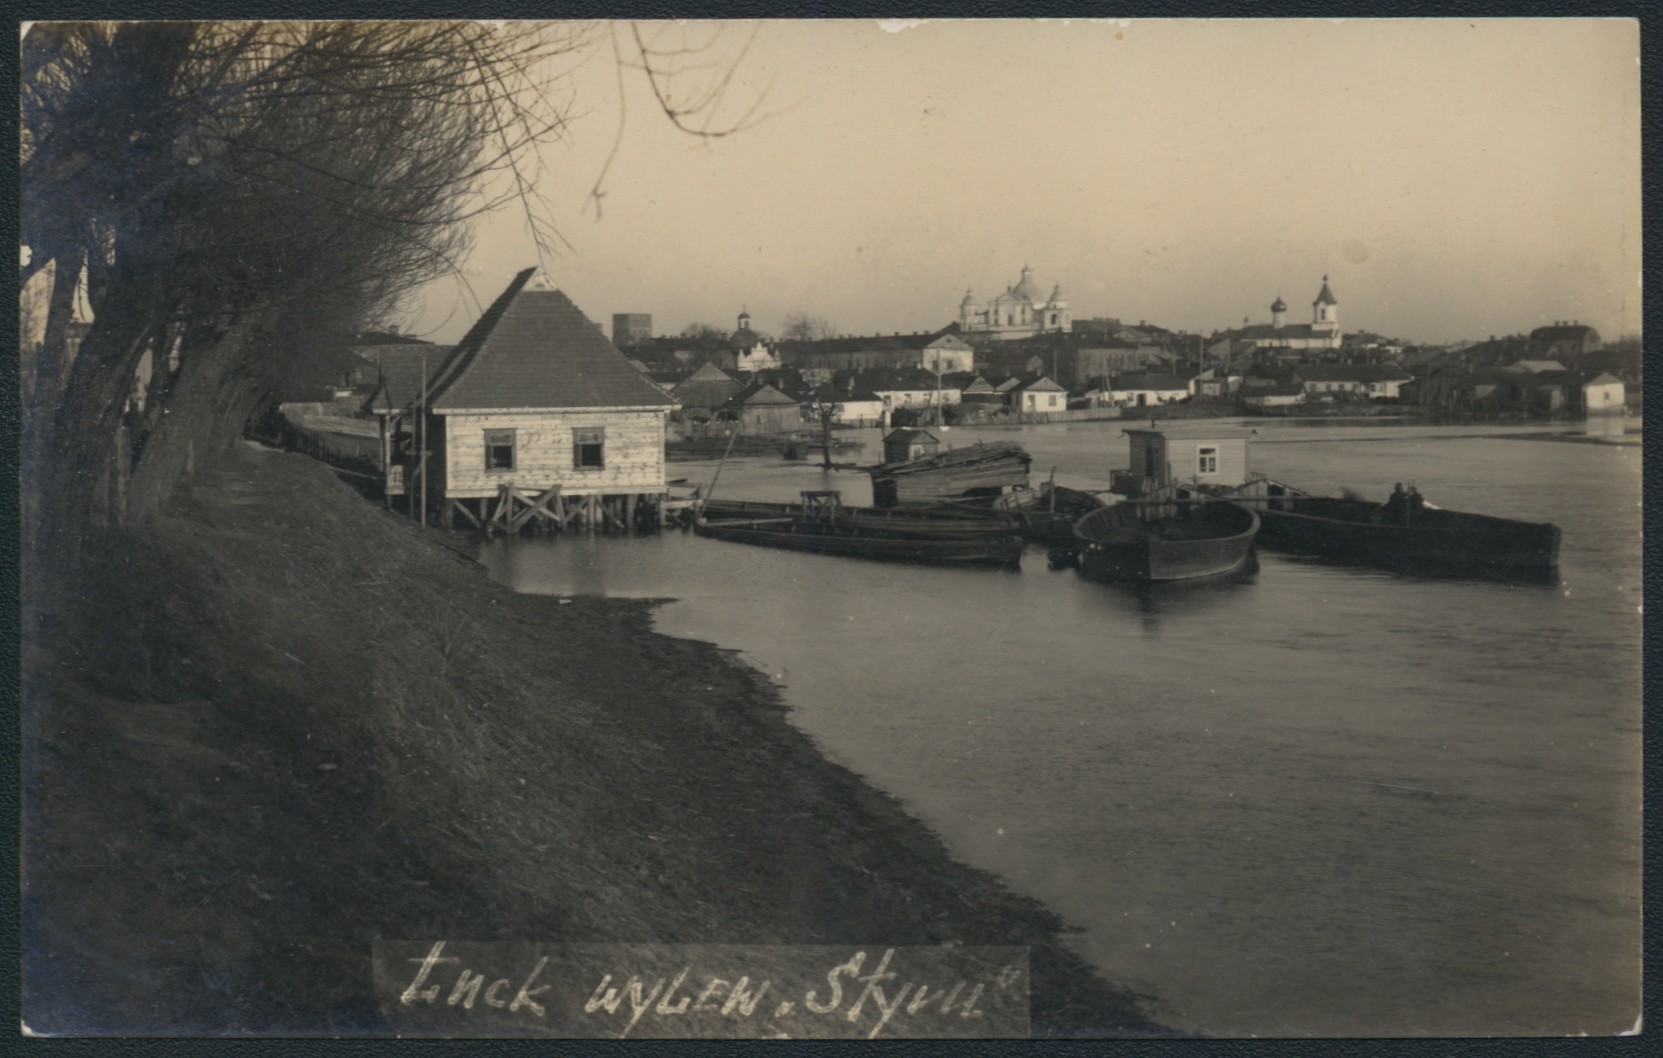 Річка Стир в Луцьку, фото до 1930 р